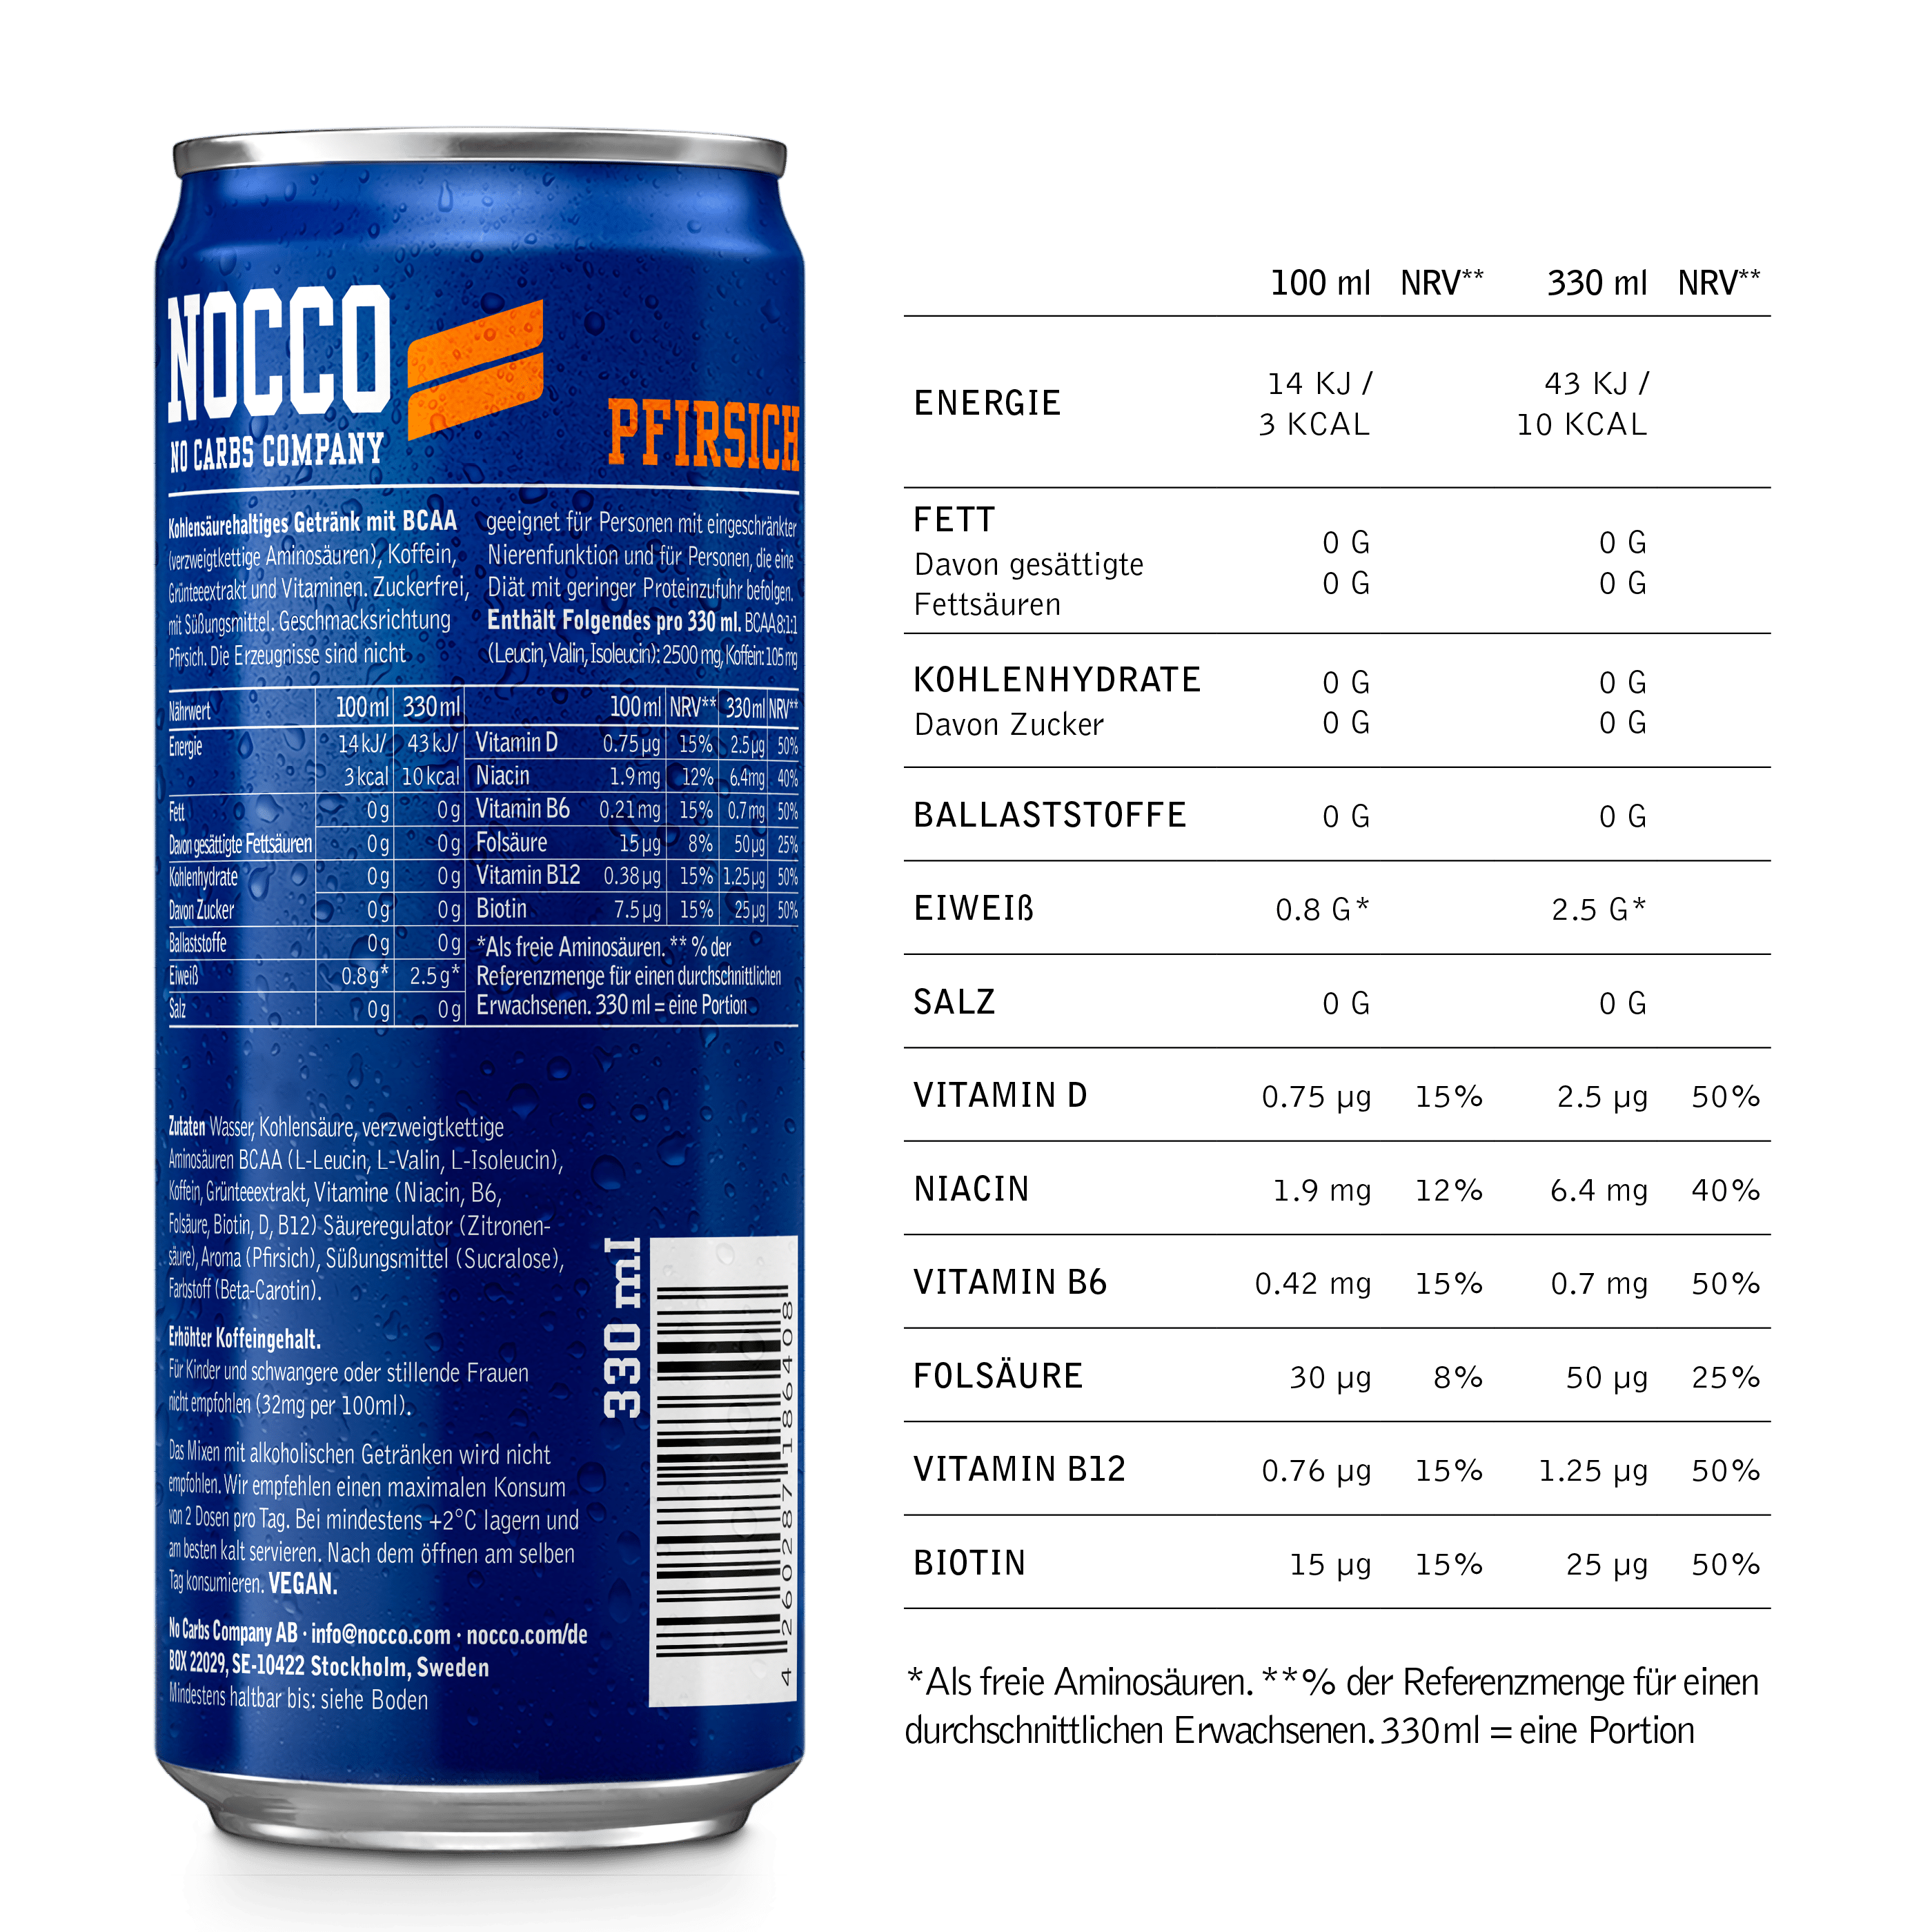 Nocco Pfirsich Nutrition